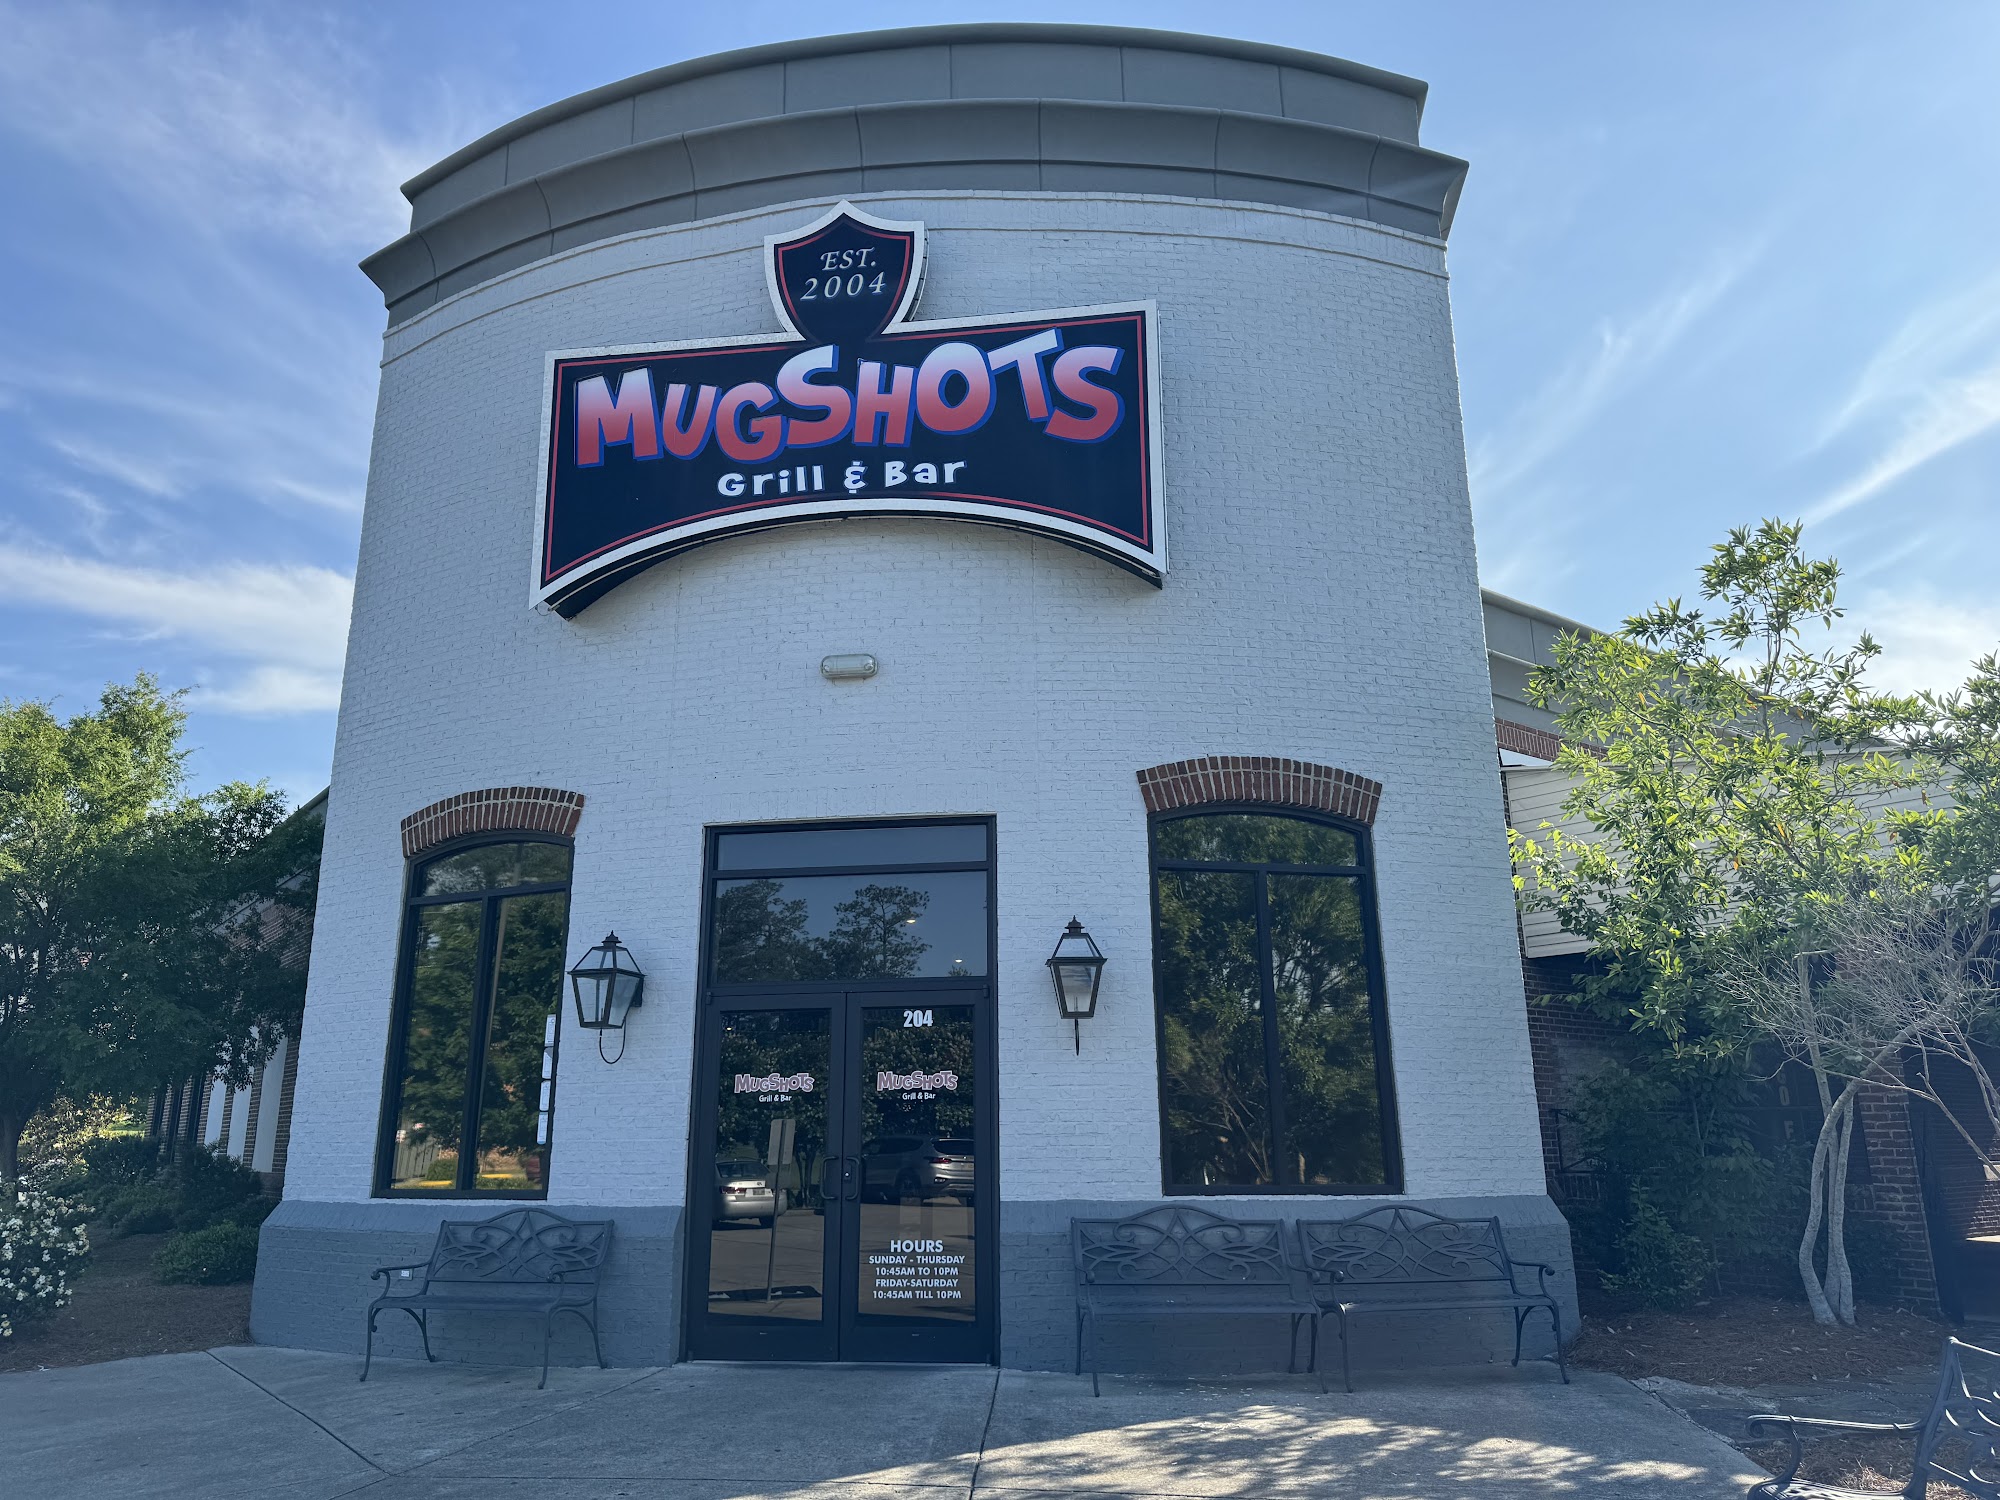 Mugshots Grill and Bar - Hattiesburg, MS 204 N 40th Ave, Hattiesburg, MS 39401